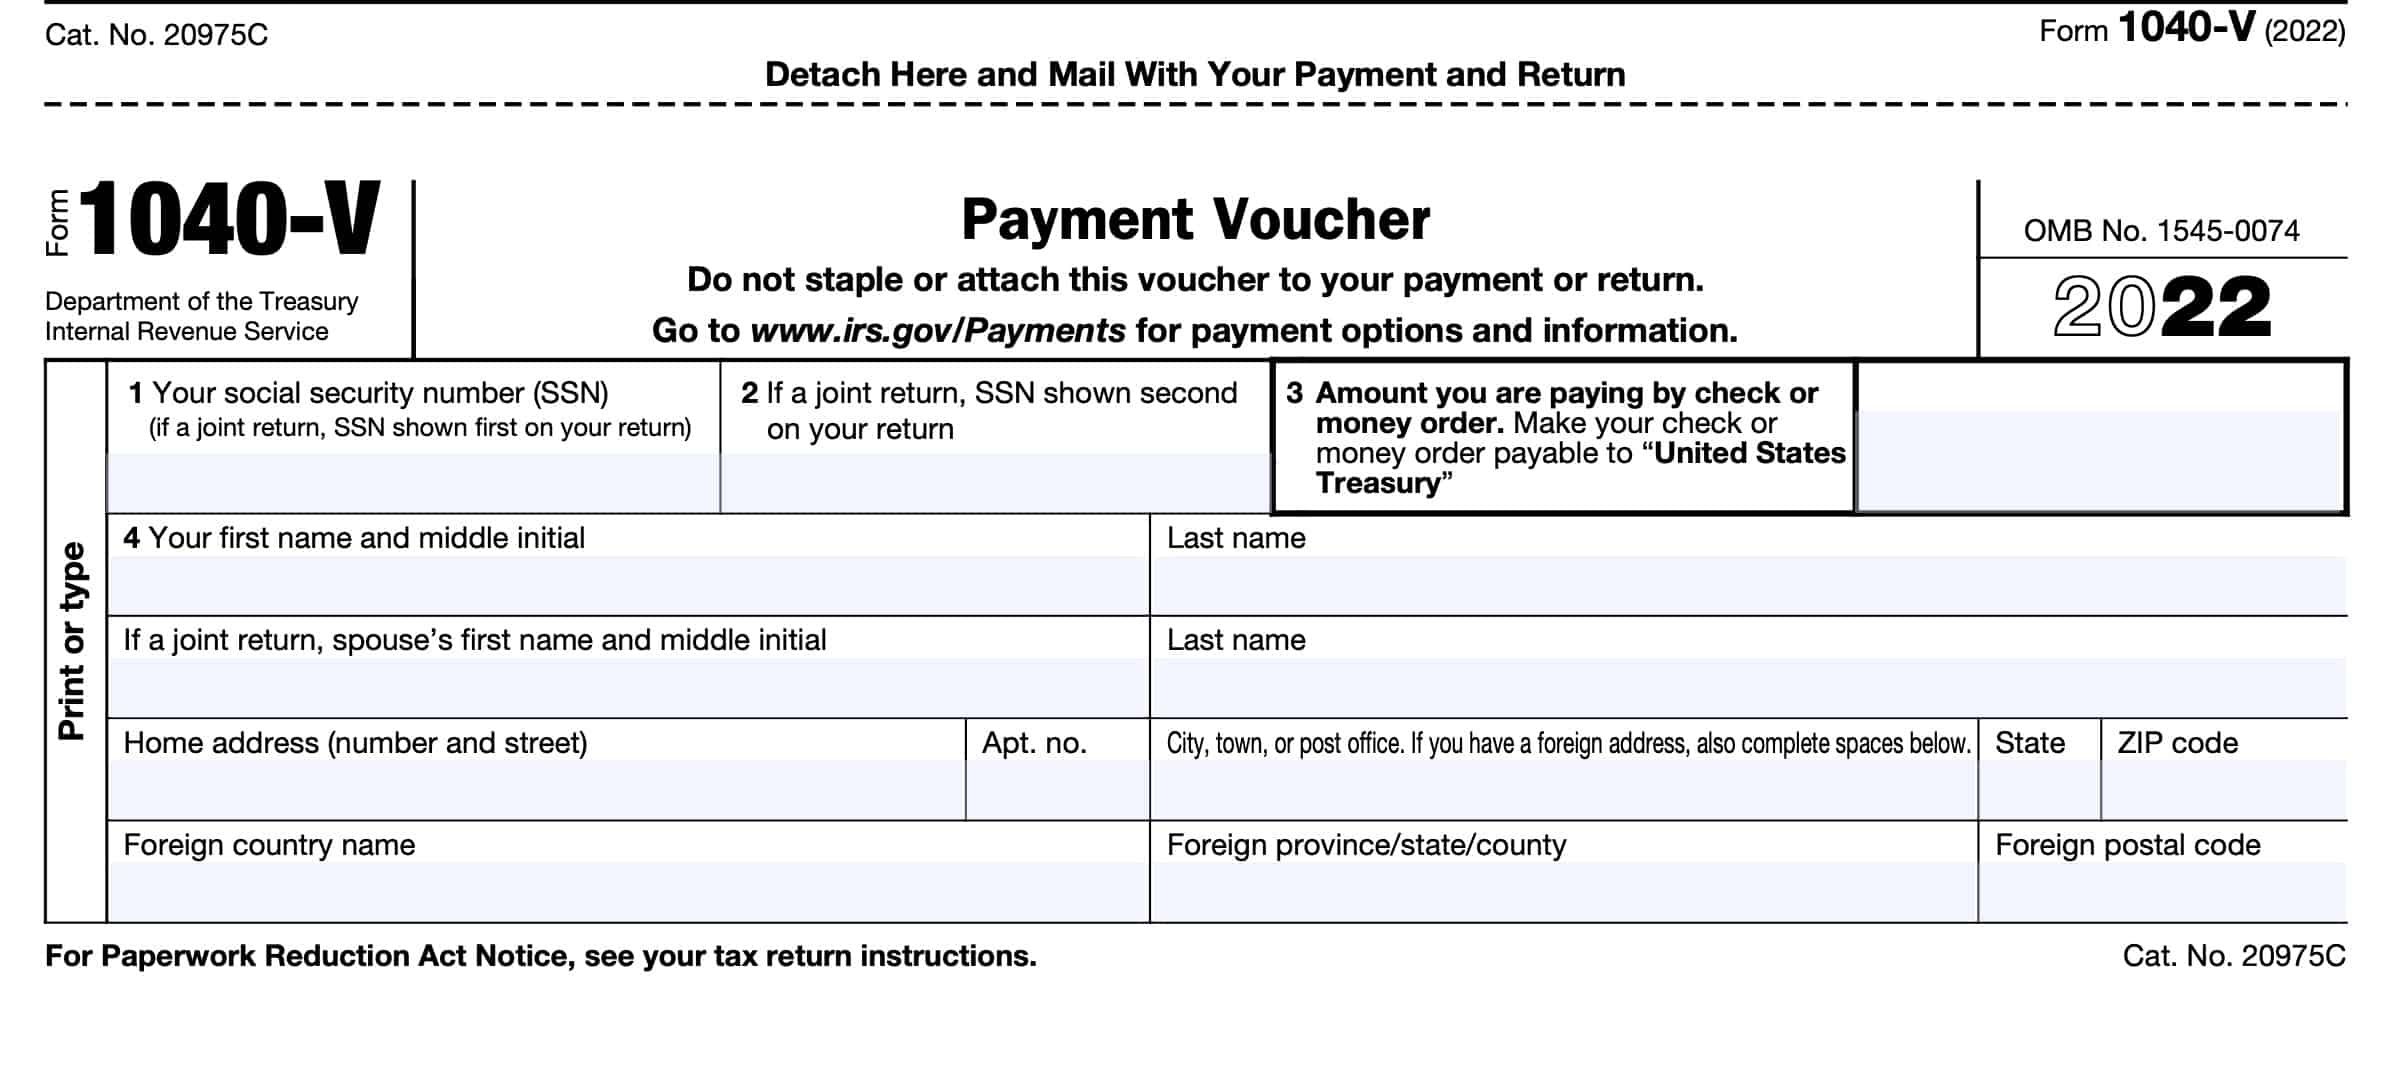 irs form 1040-V, payment voucher